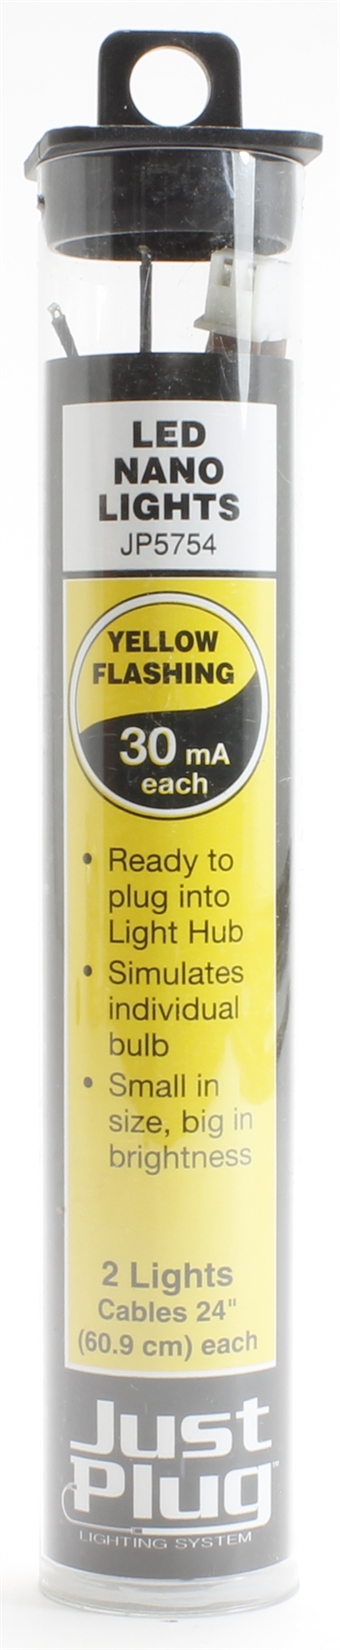 Yellow LED flashing nano lights for Just Plug lighting system